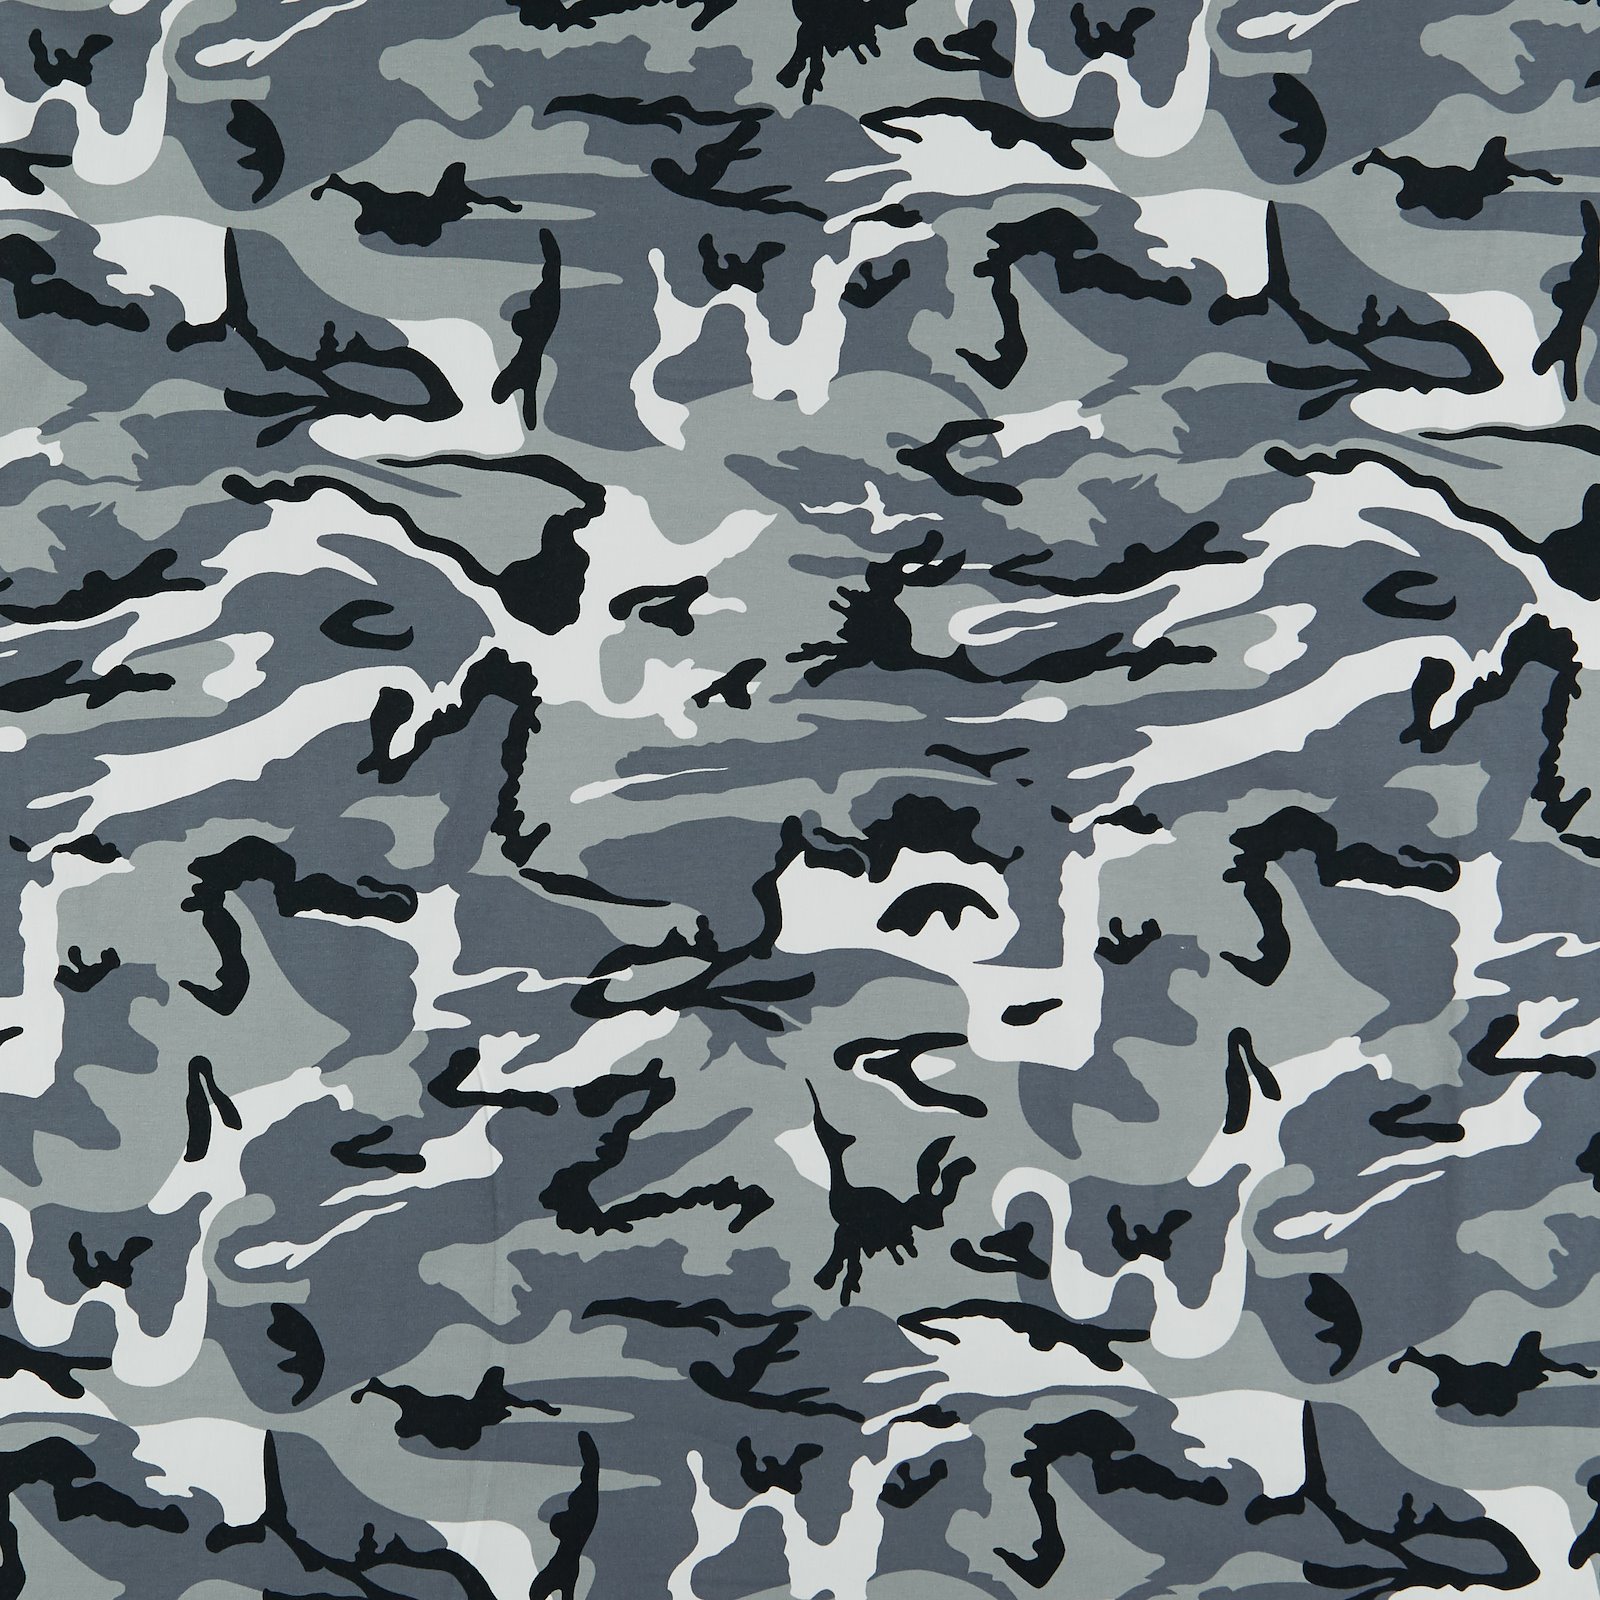 Sweat blaugrau m camouflage print ang. 211930_pack_sp